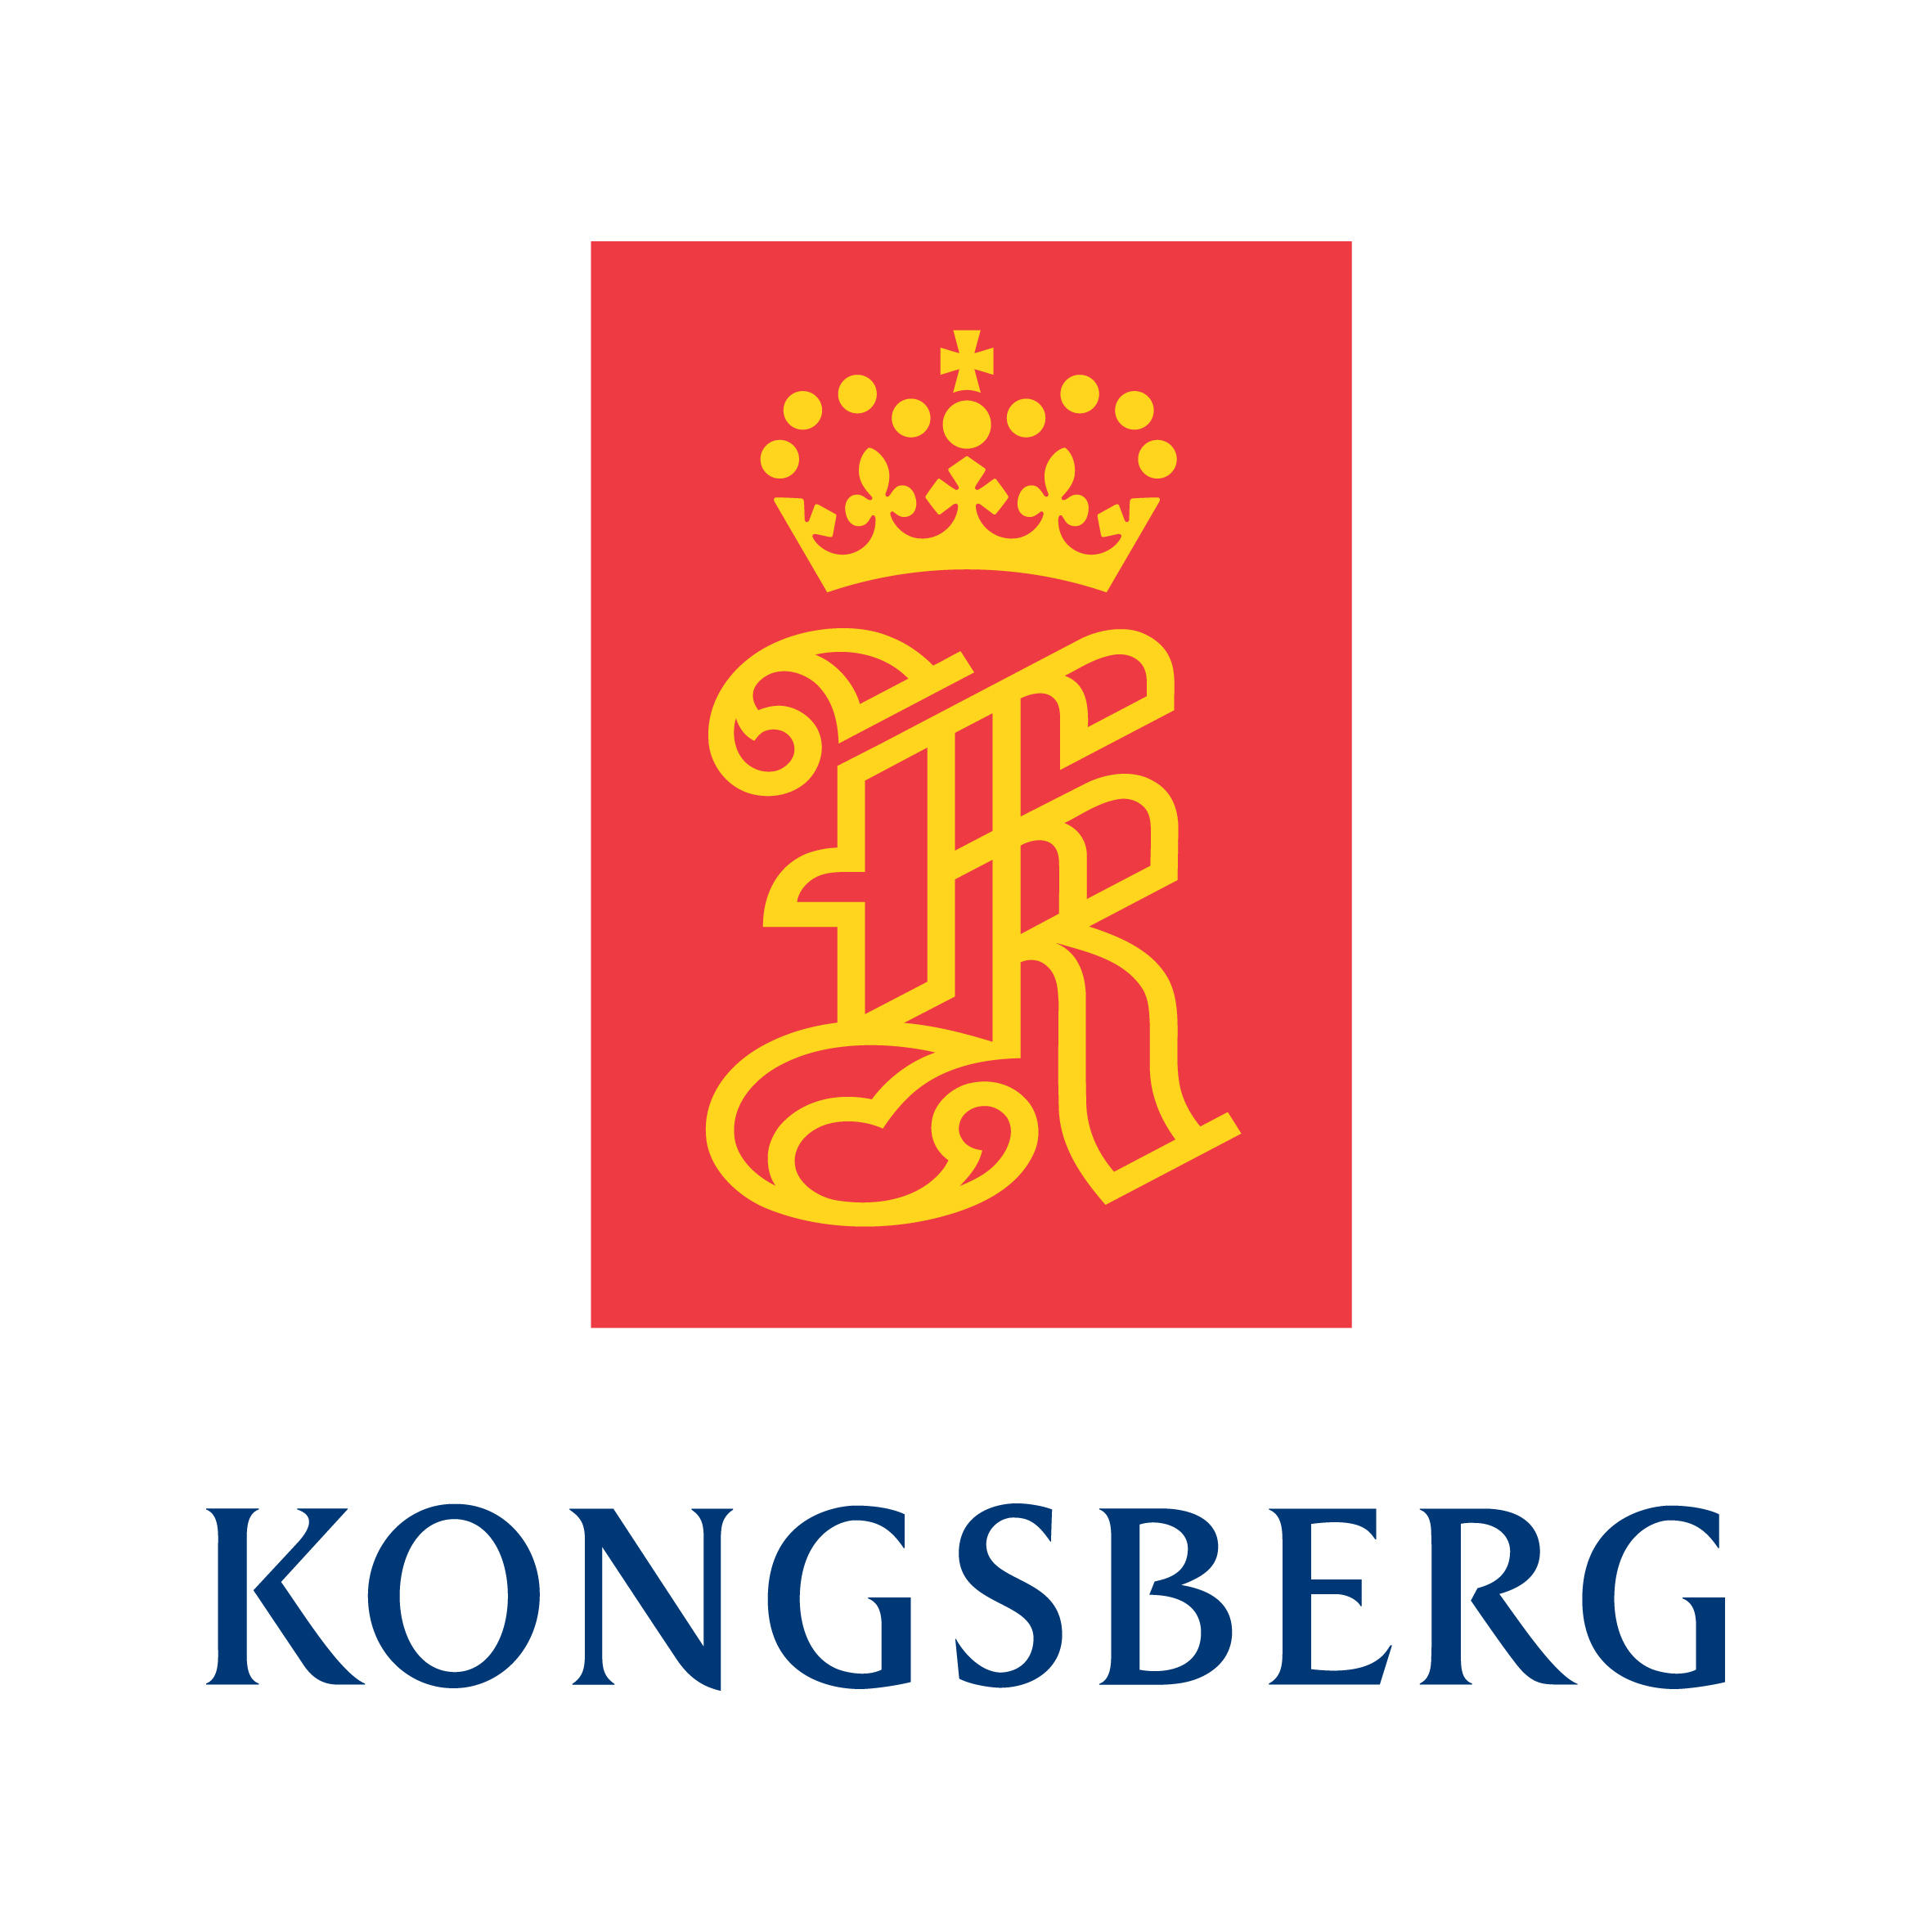 kongsberg logo